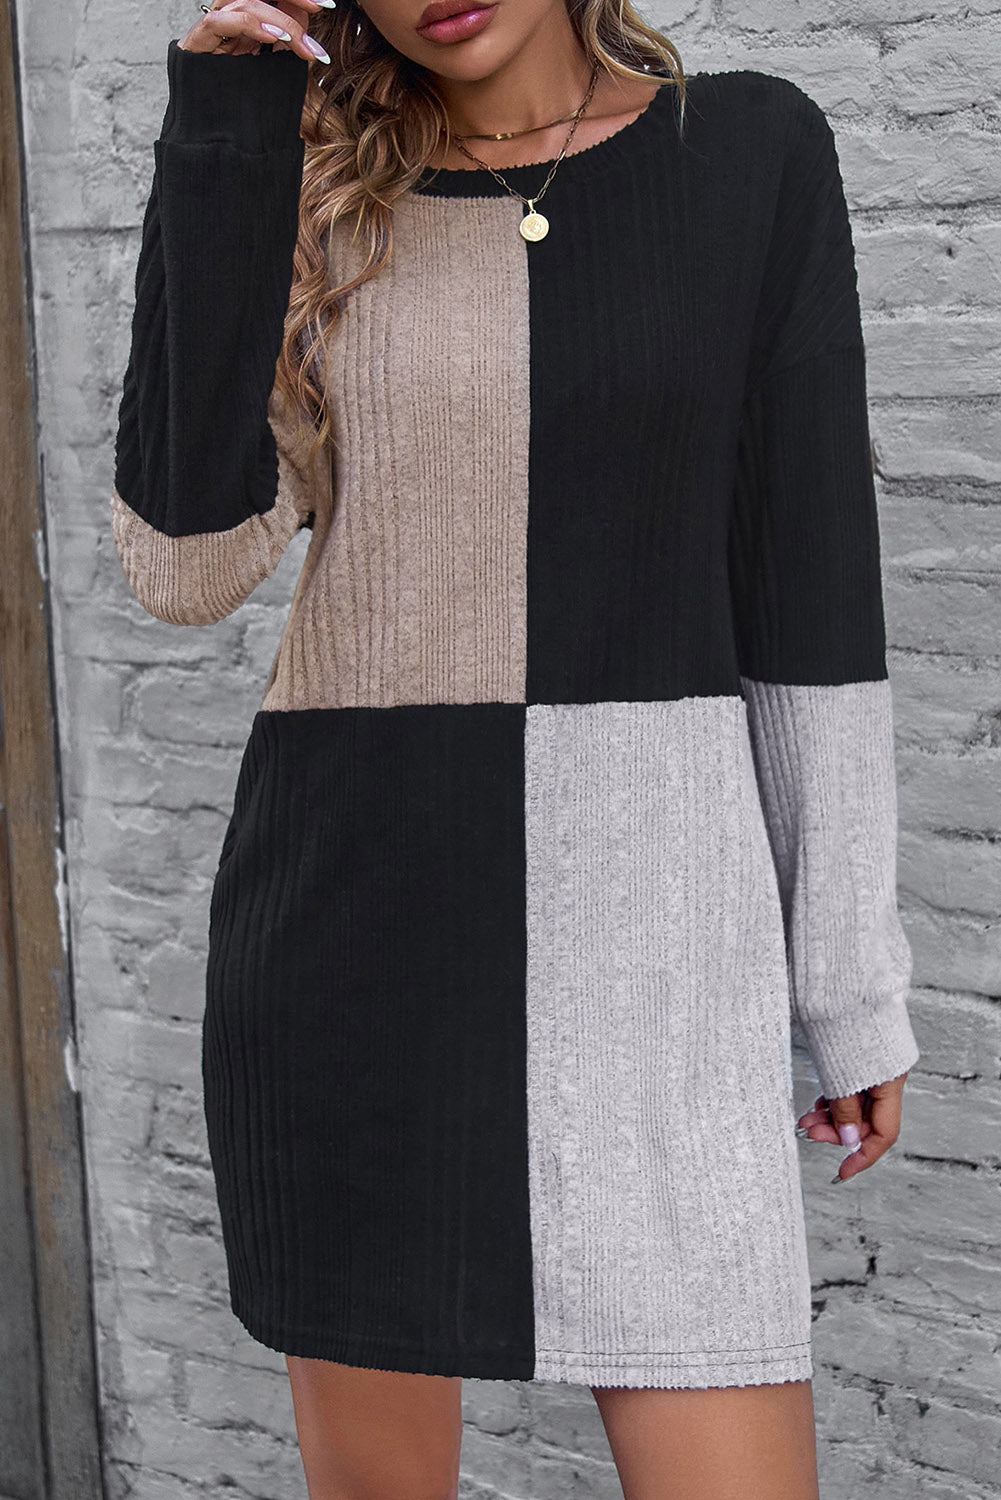 Black Ribbed Color Block Drop Shoulder Long Sleeve Mini Dress